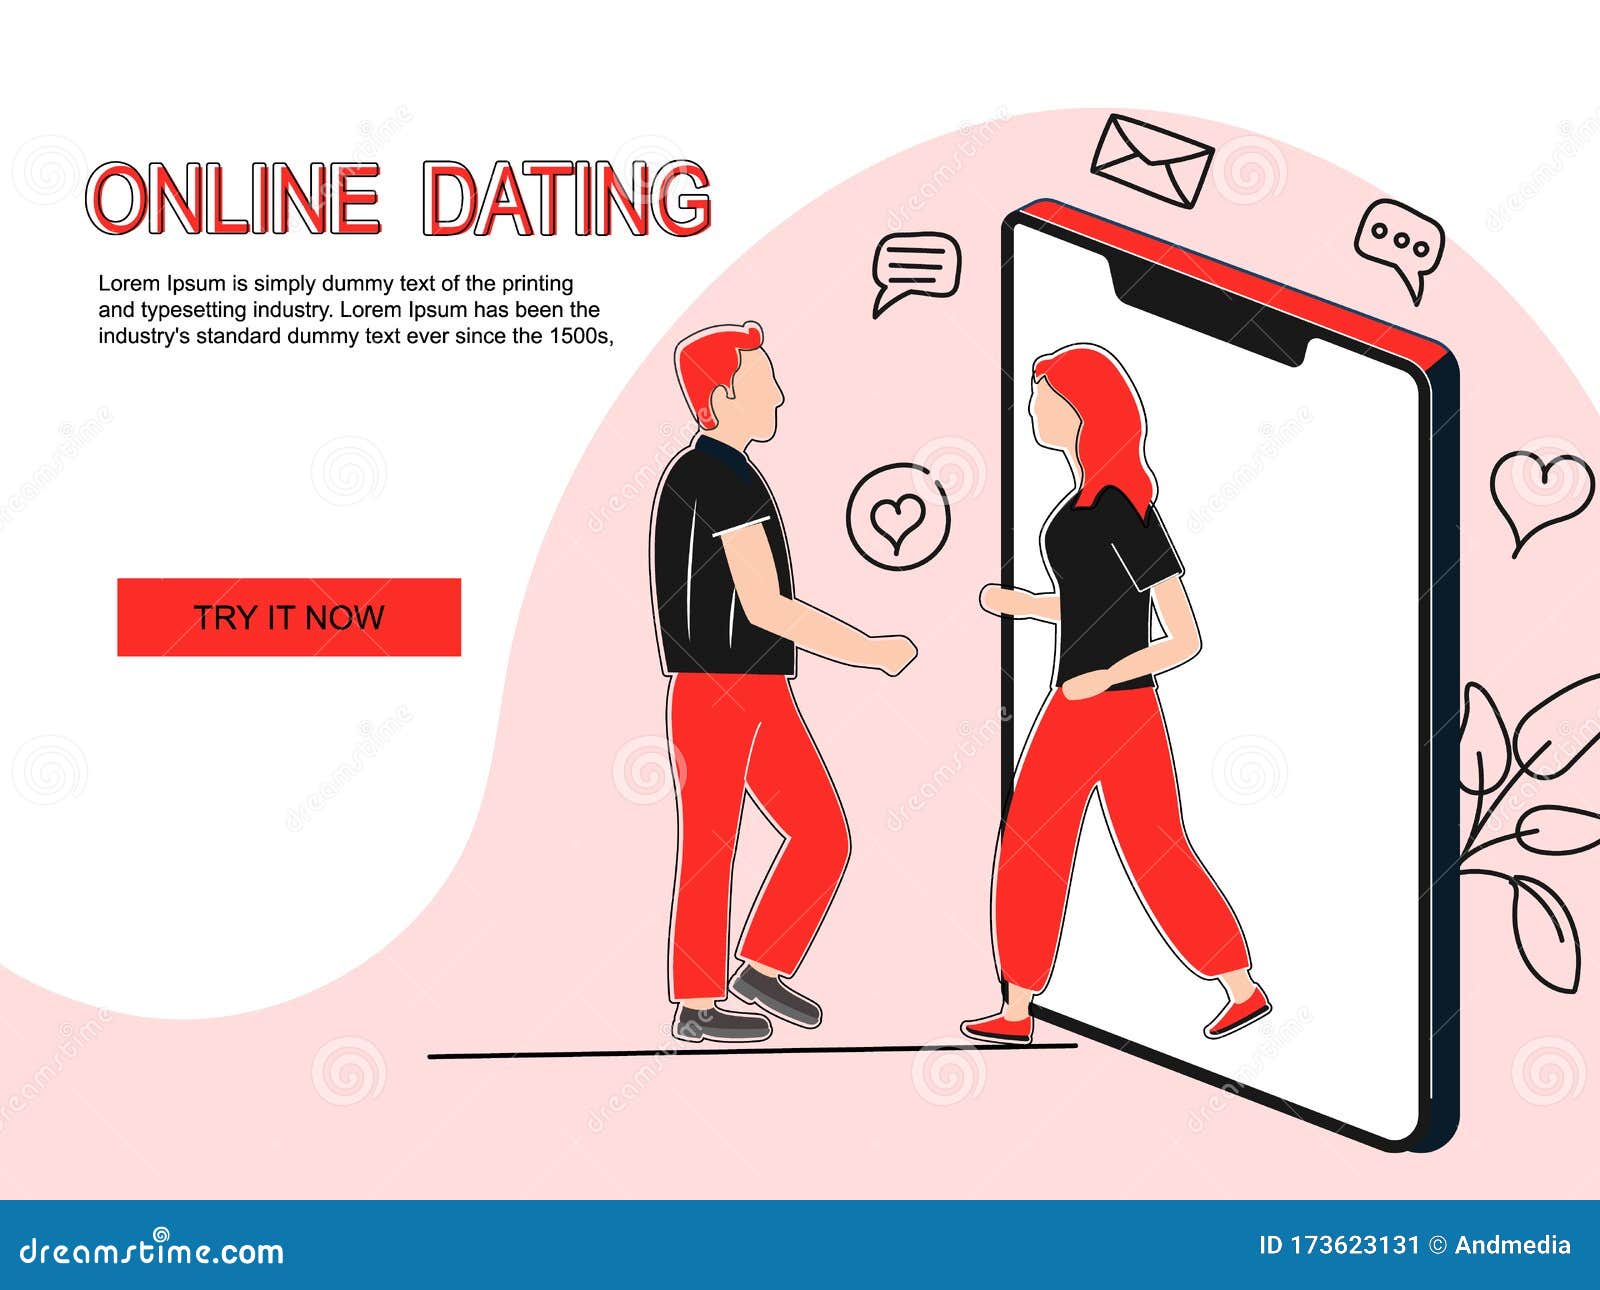 GRATUIT ProximeTy com Dating Site